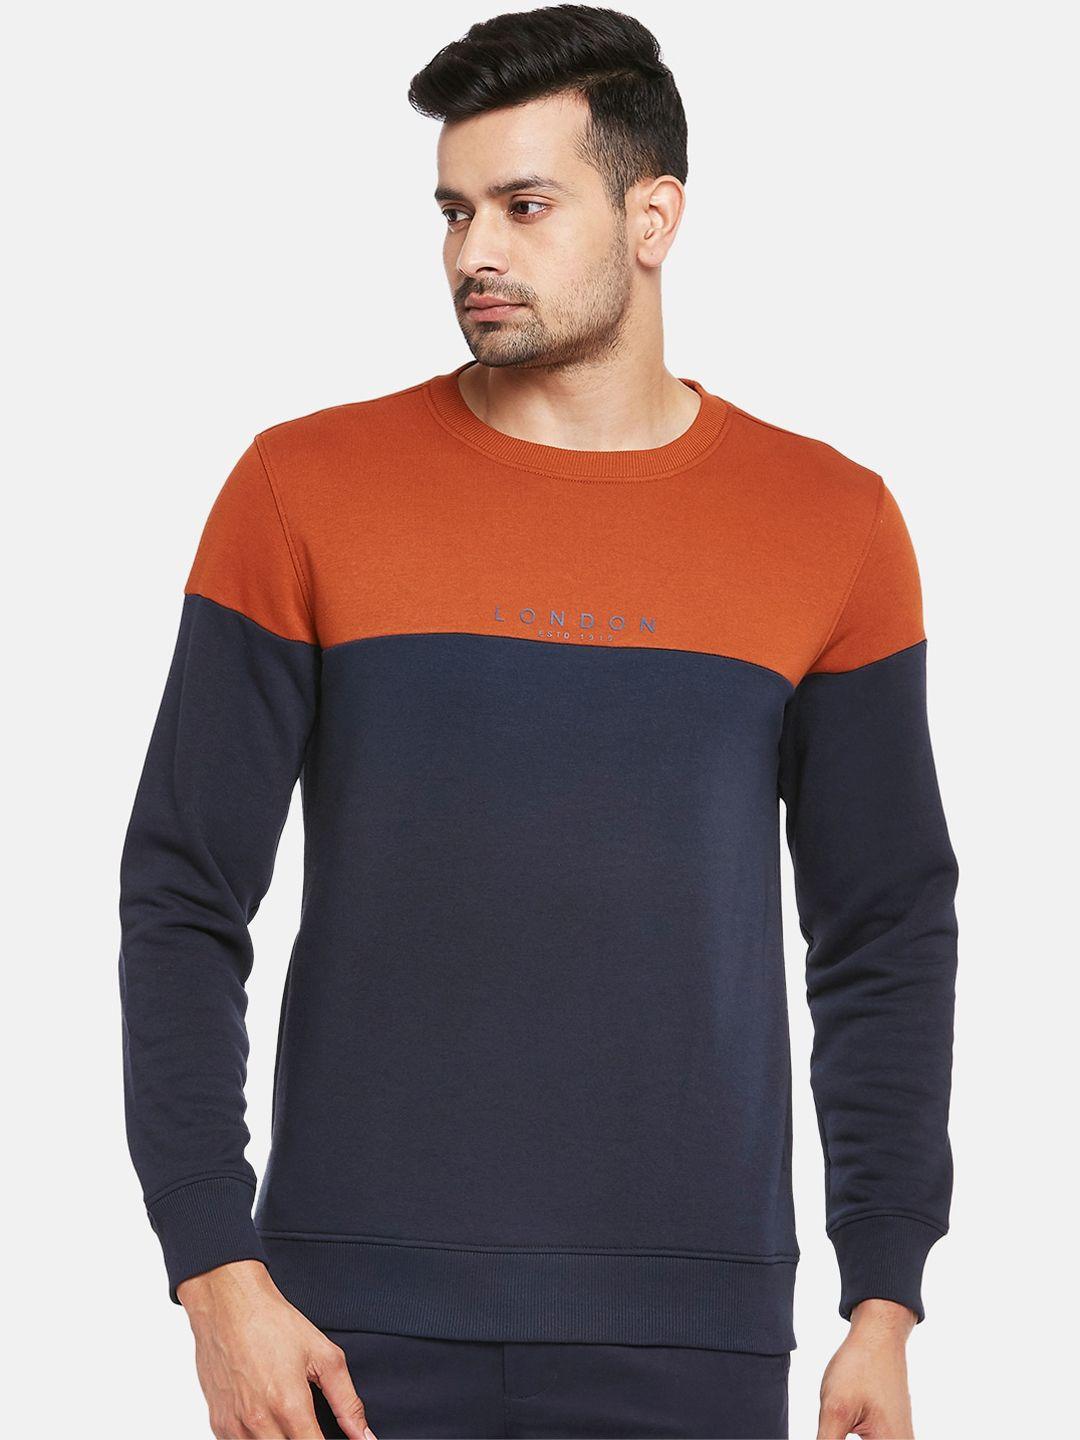 byford by pantaloons men tan brown & navy blue colourblocked sweatshirt